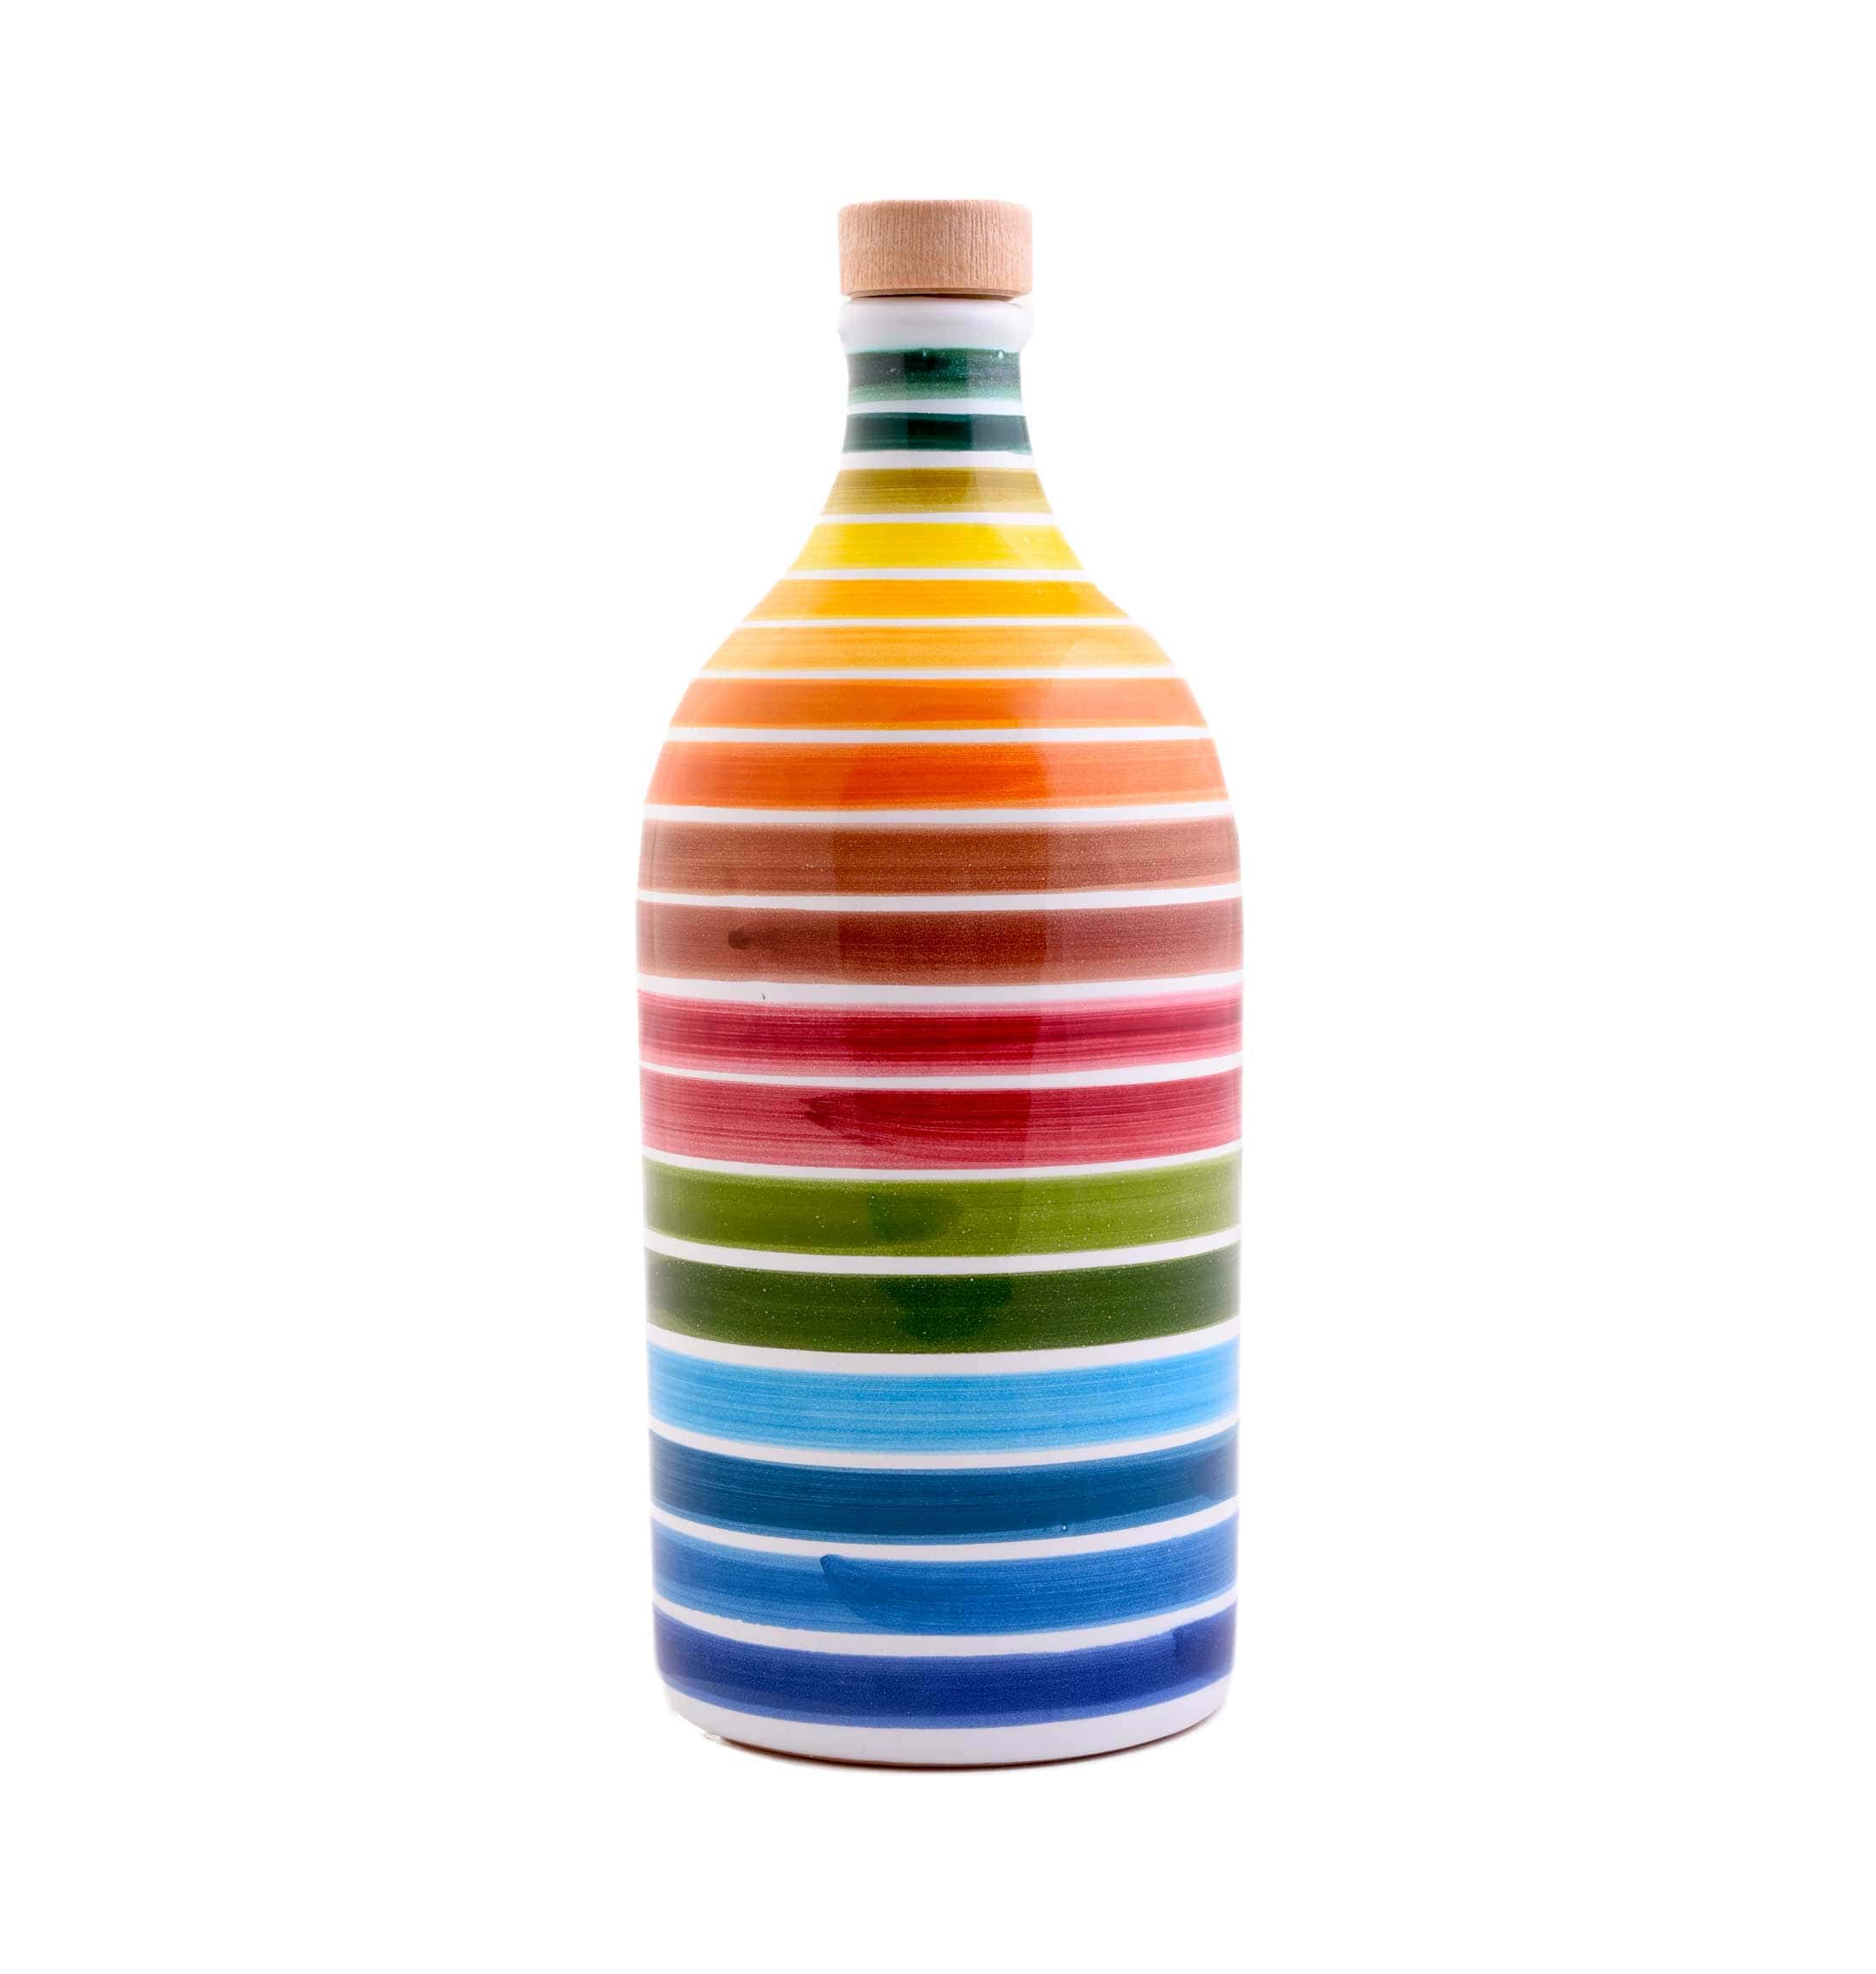 Rainbow ceramic jar